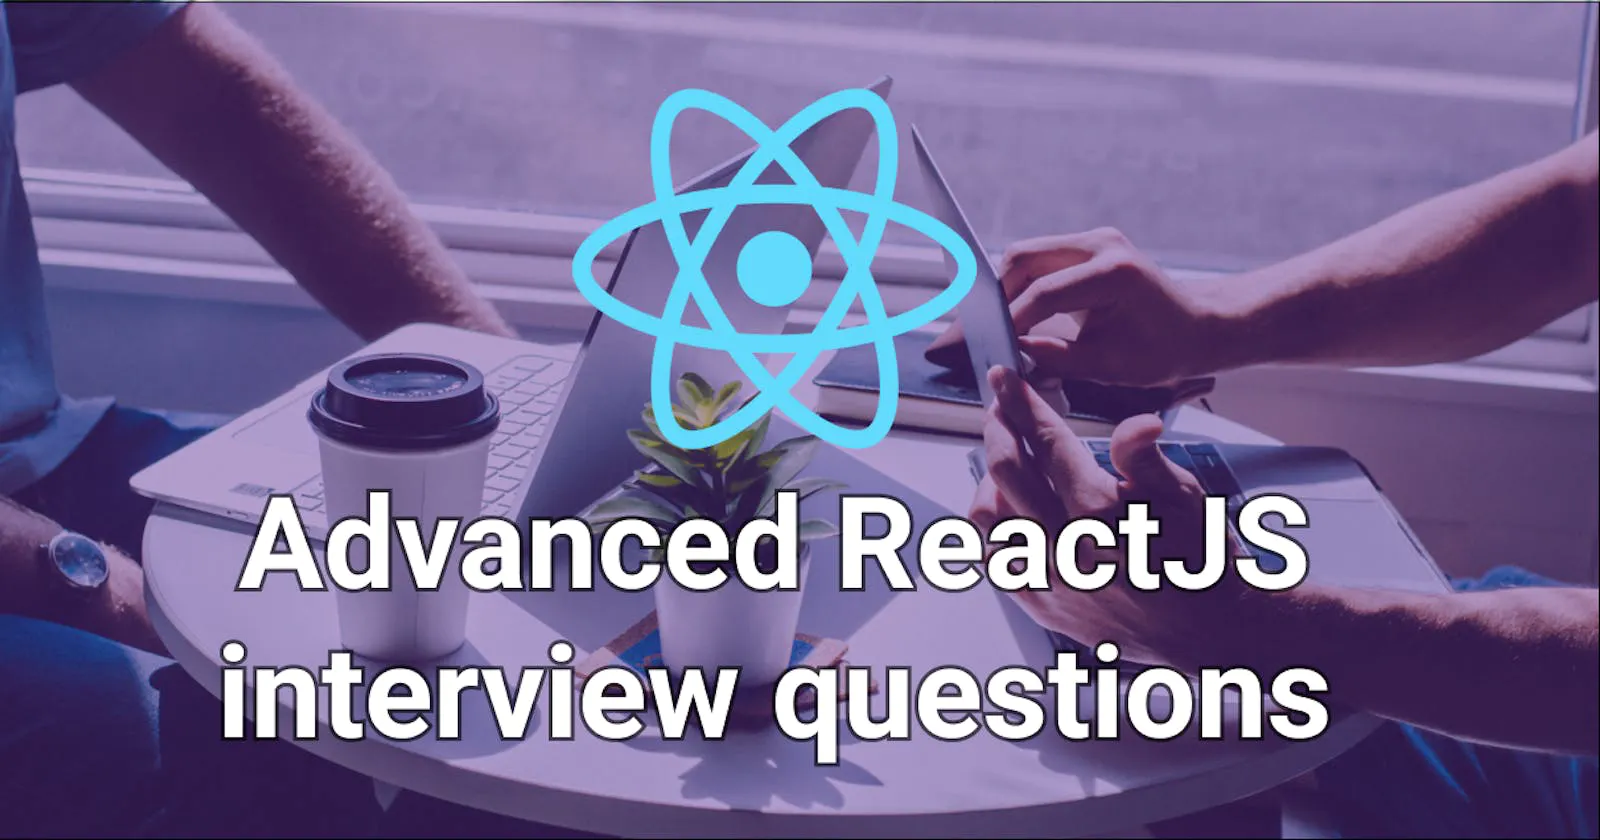 Top 3 advanced ReactJS interview questions